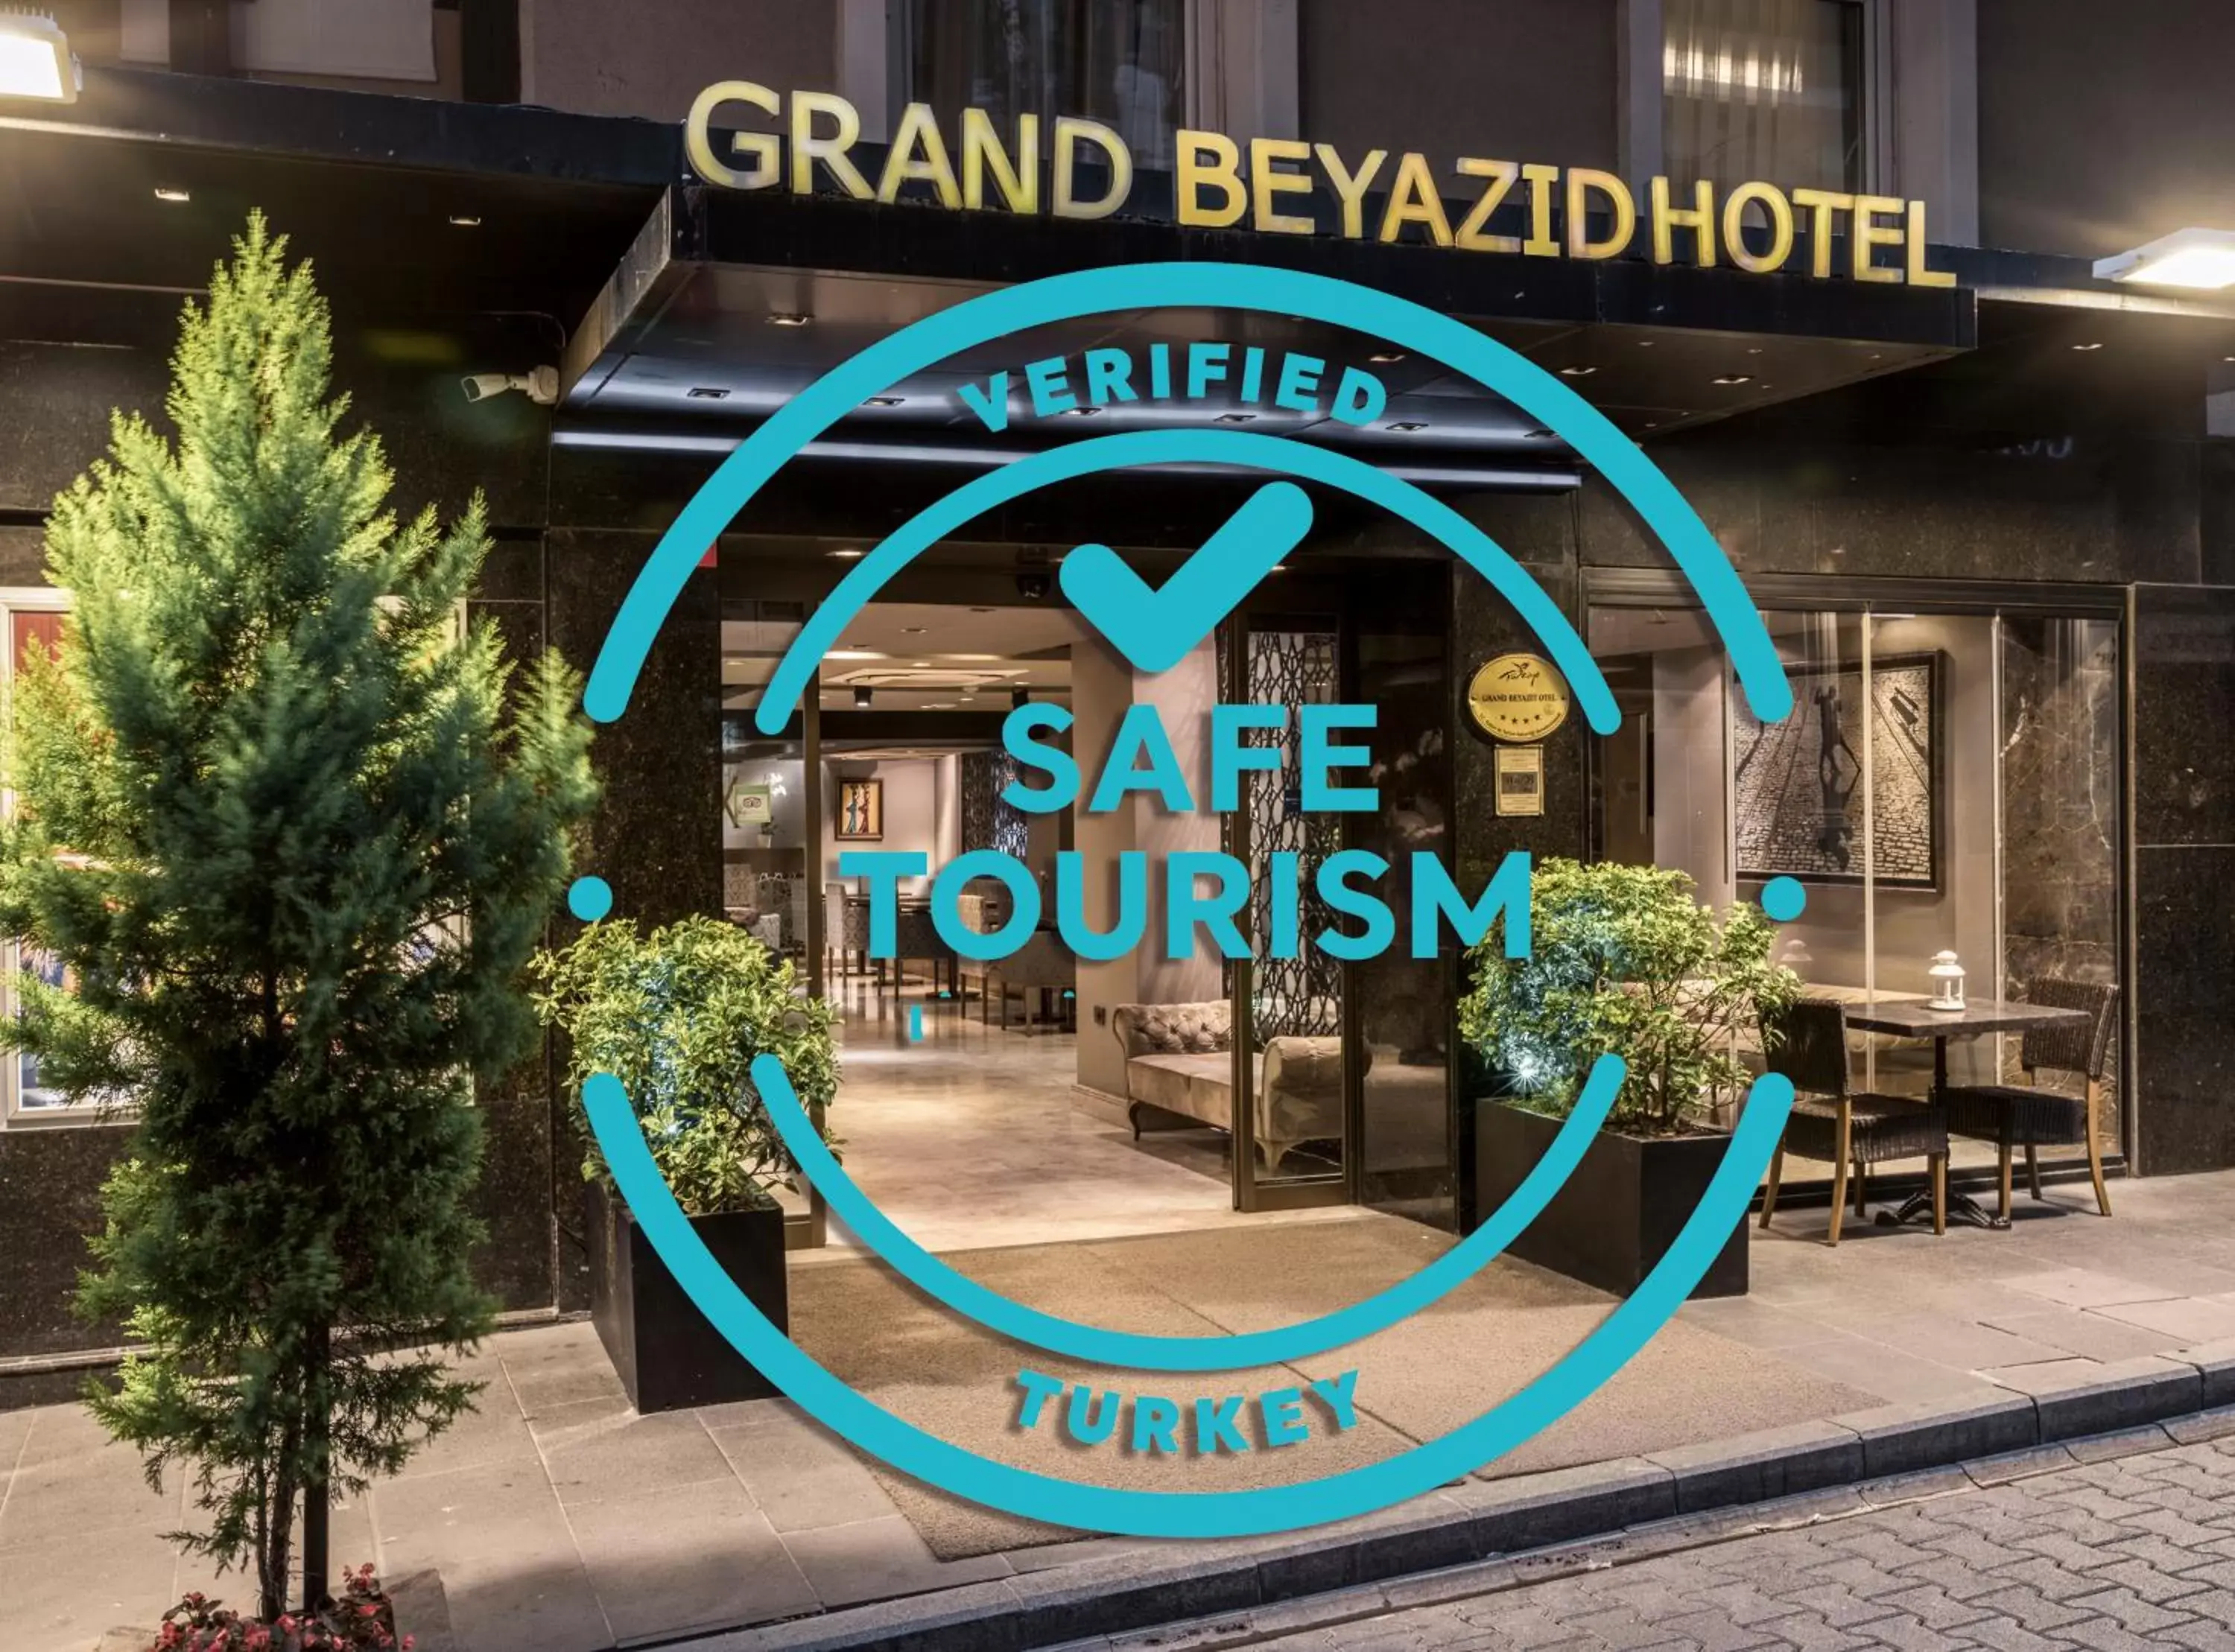 Facade/entrance in Grand Beyazit Hotel